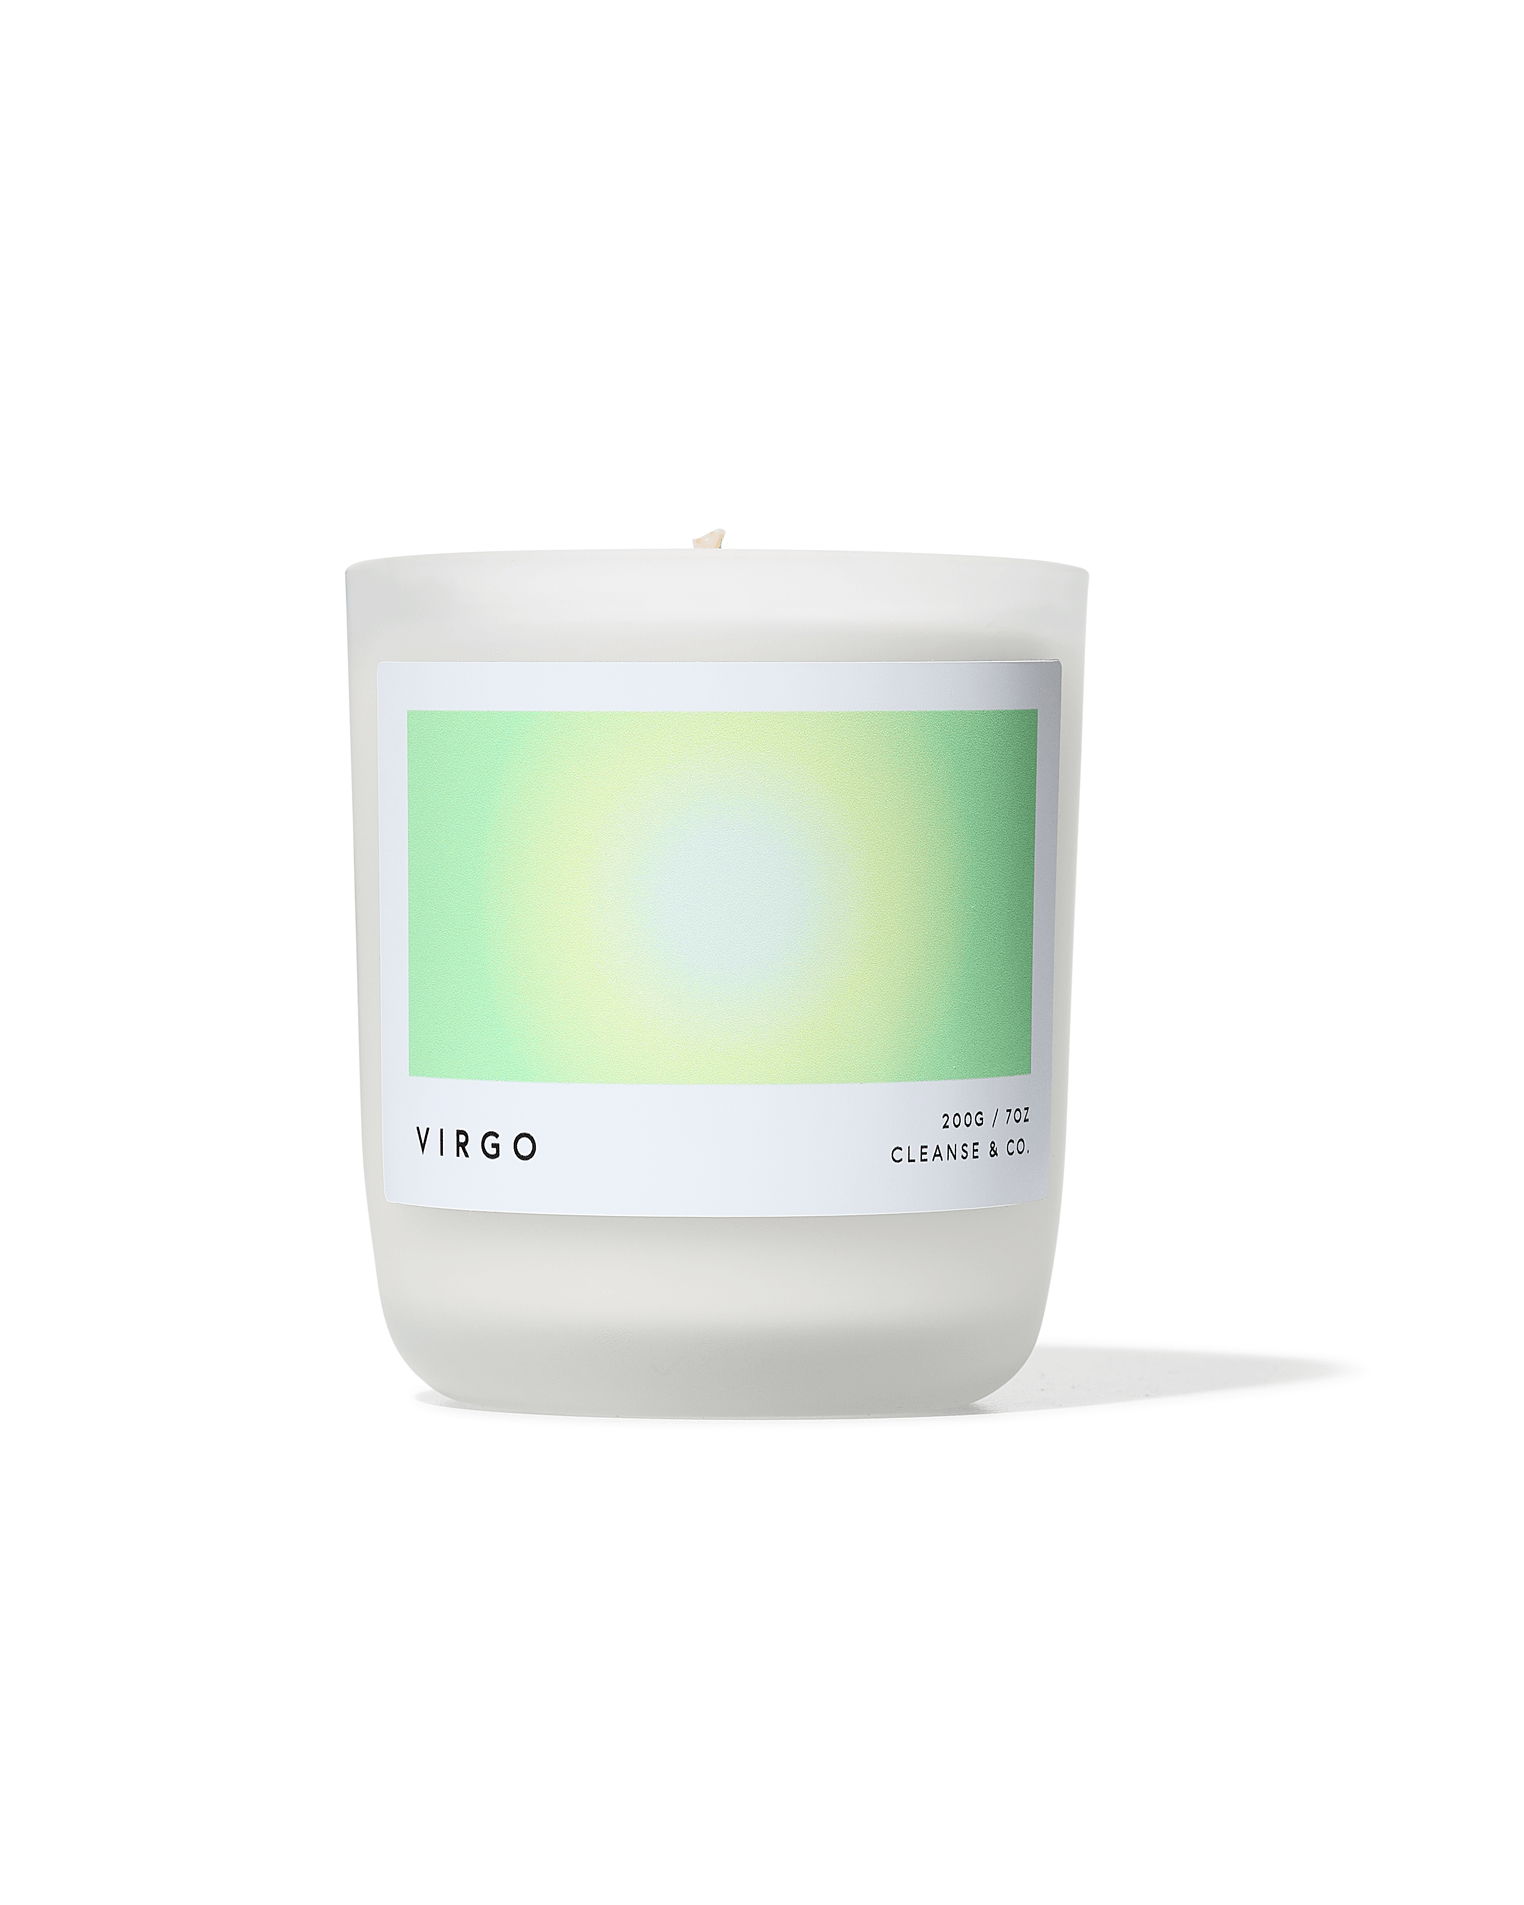 Virgo - Aura Candle: 200G / Kakadu Plum & Mimosa by Cleanse & Co.